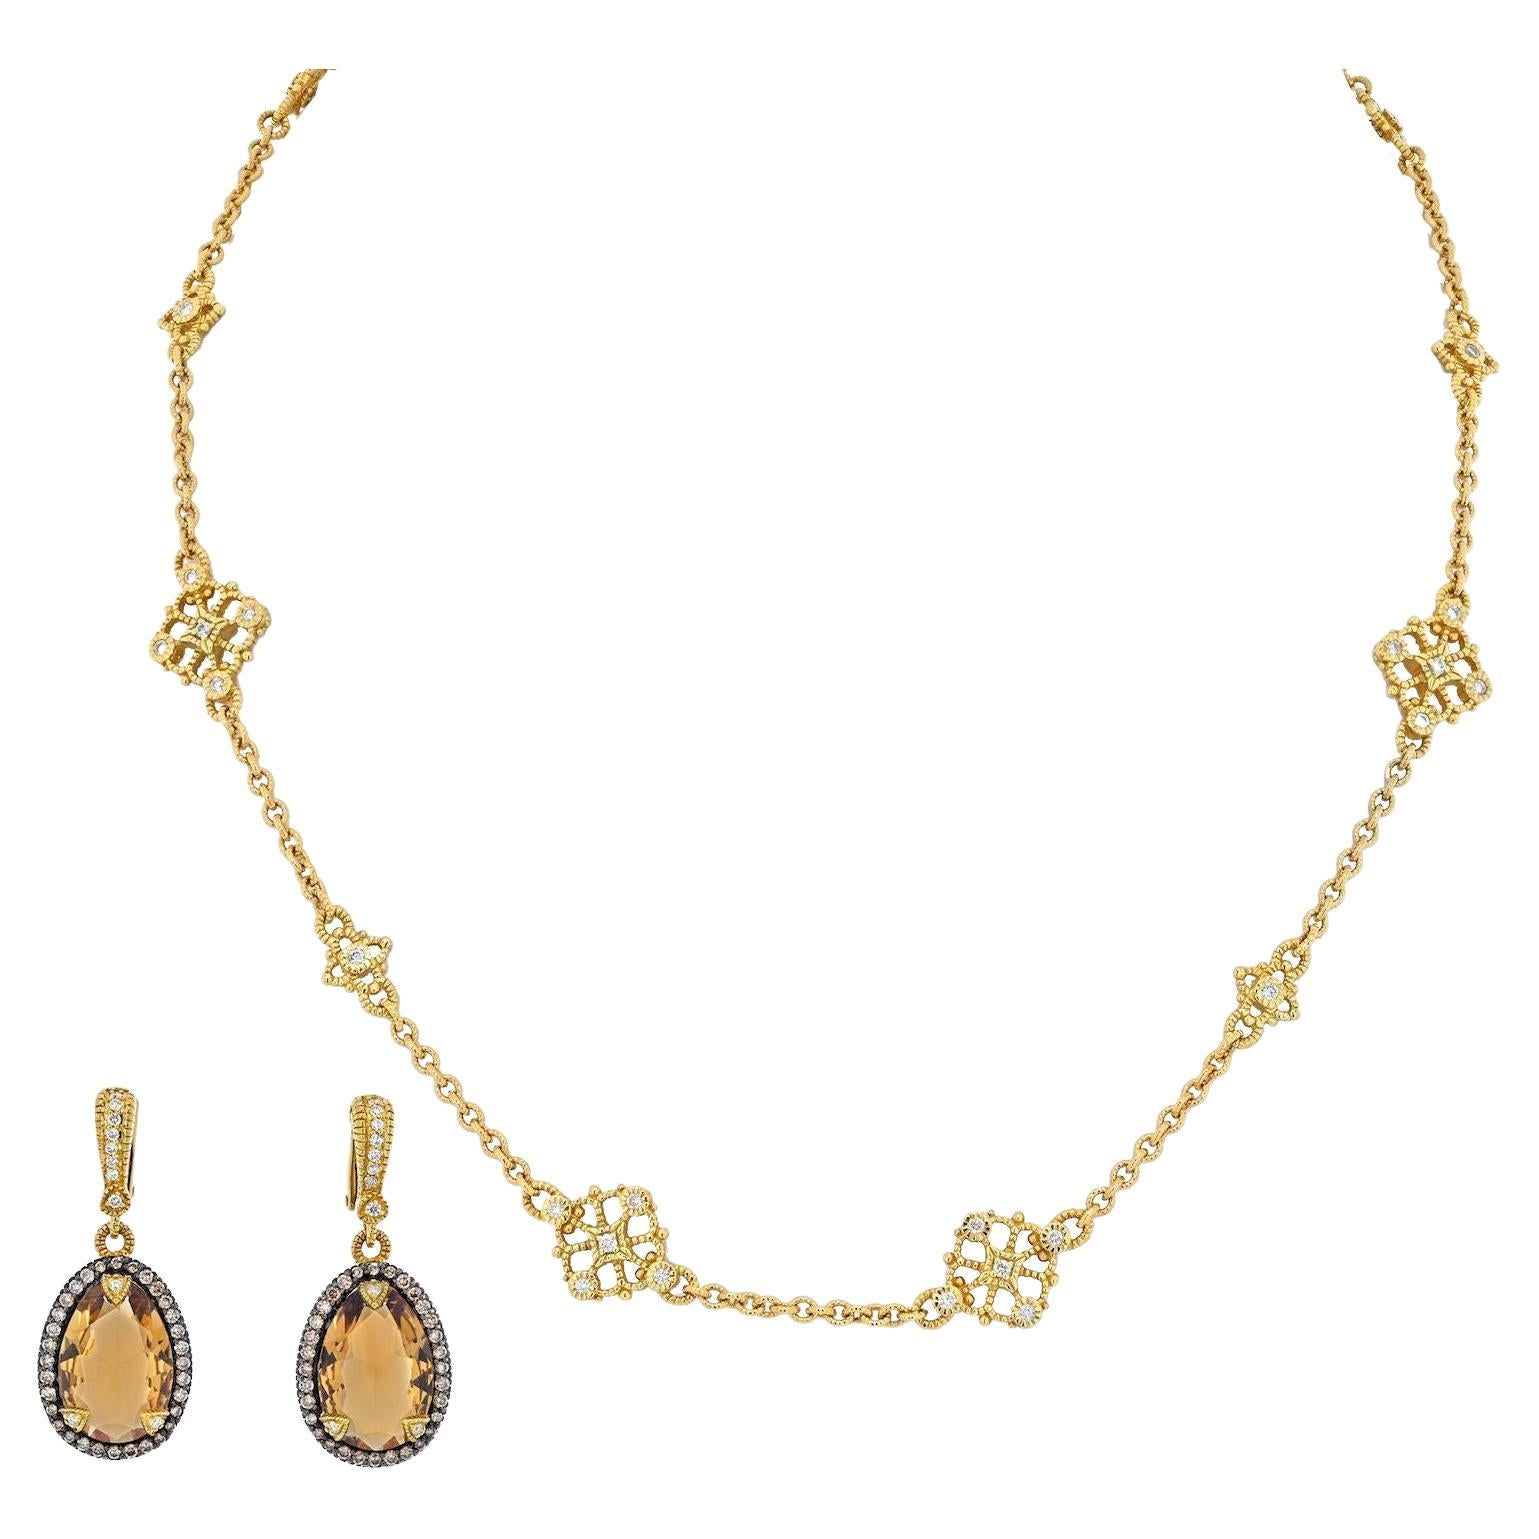 Judith Ripka 18K Yellow Gold Necklace & Earrings Jewelry Set